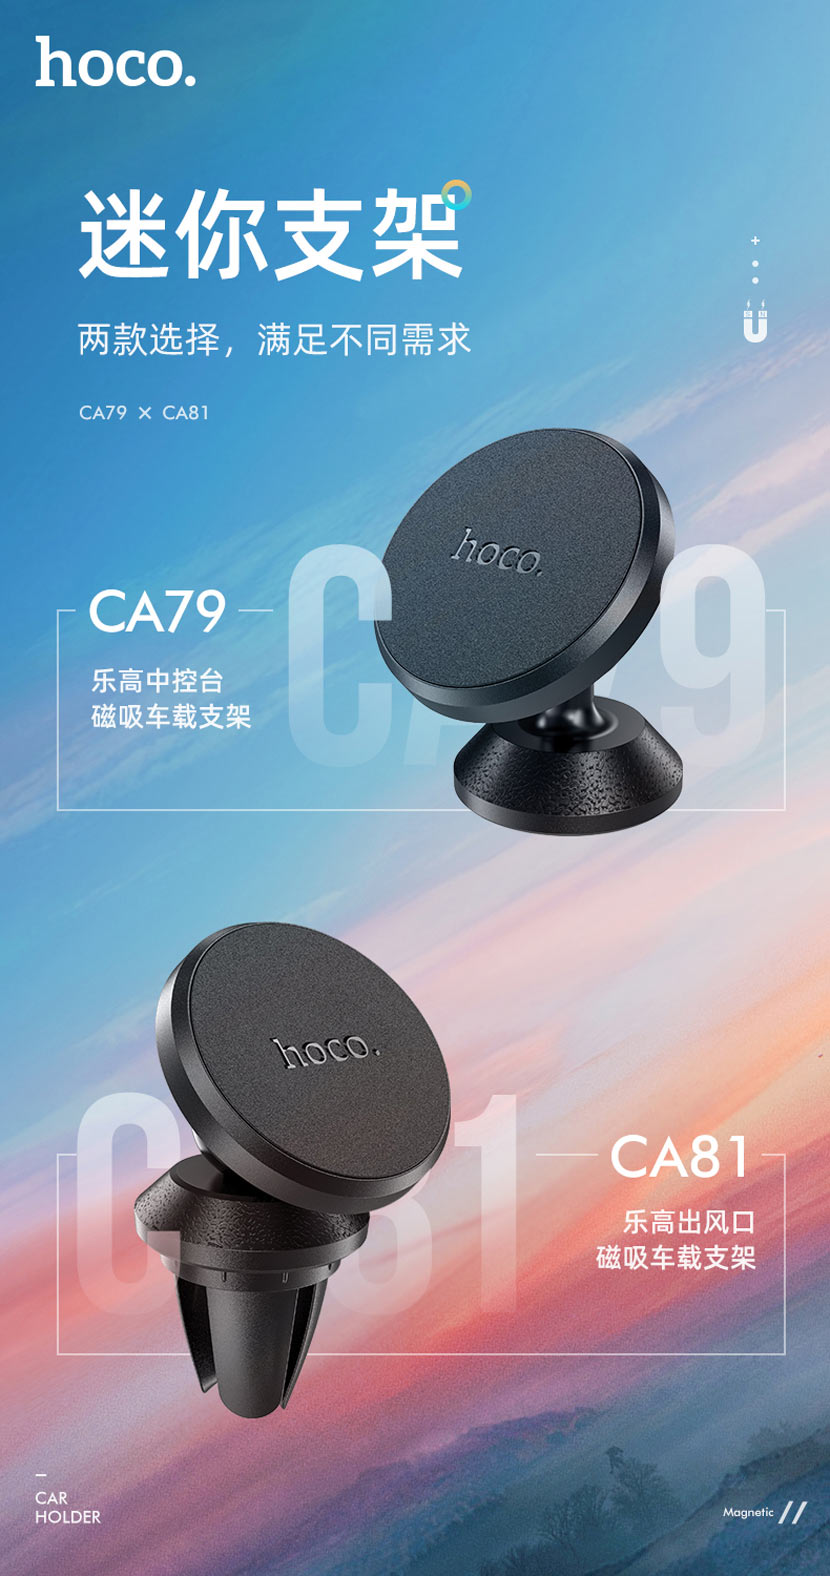 hoco news ca79 ca81 magnetic car holders mini cn